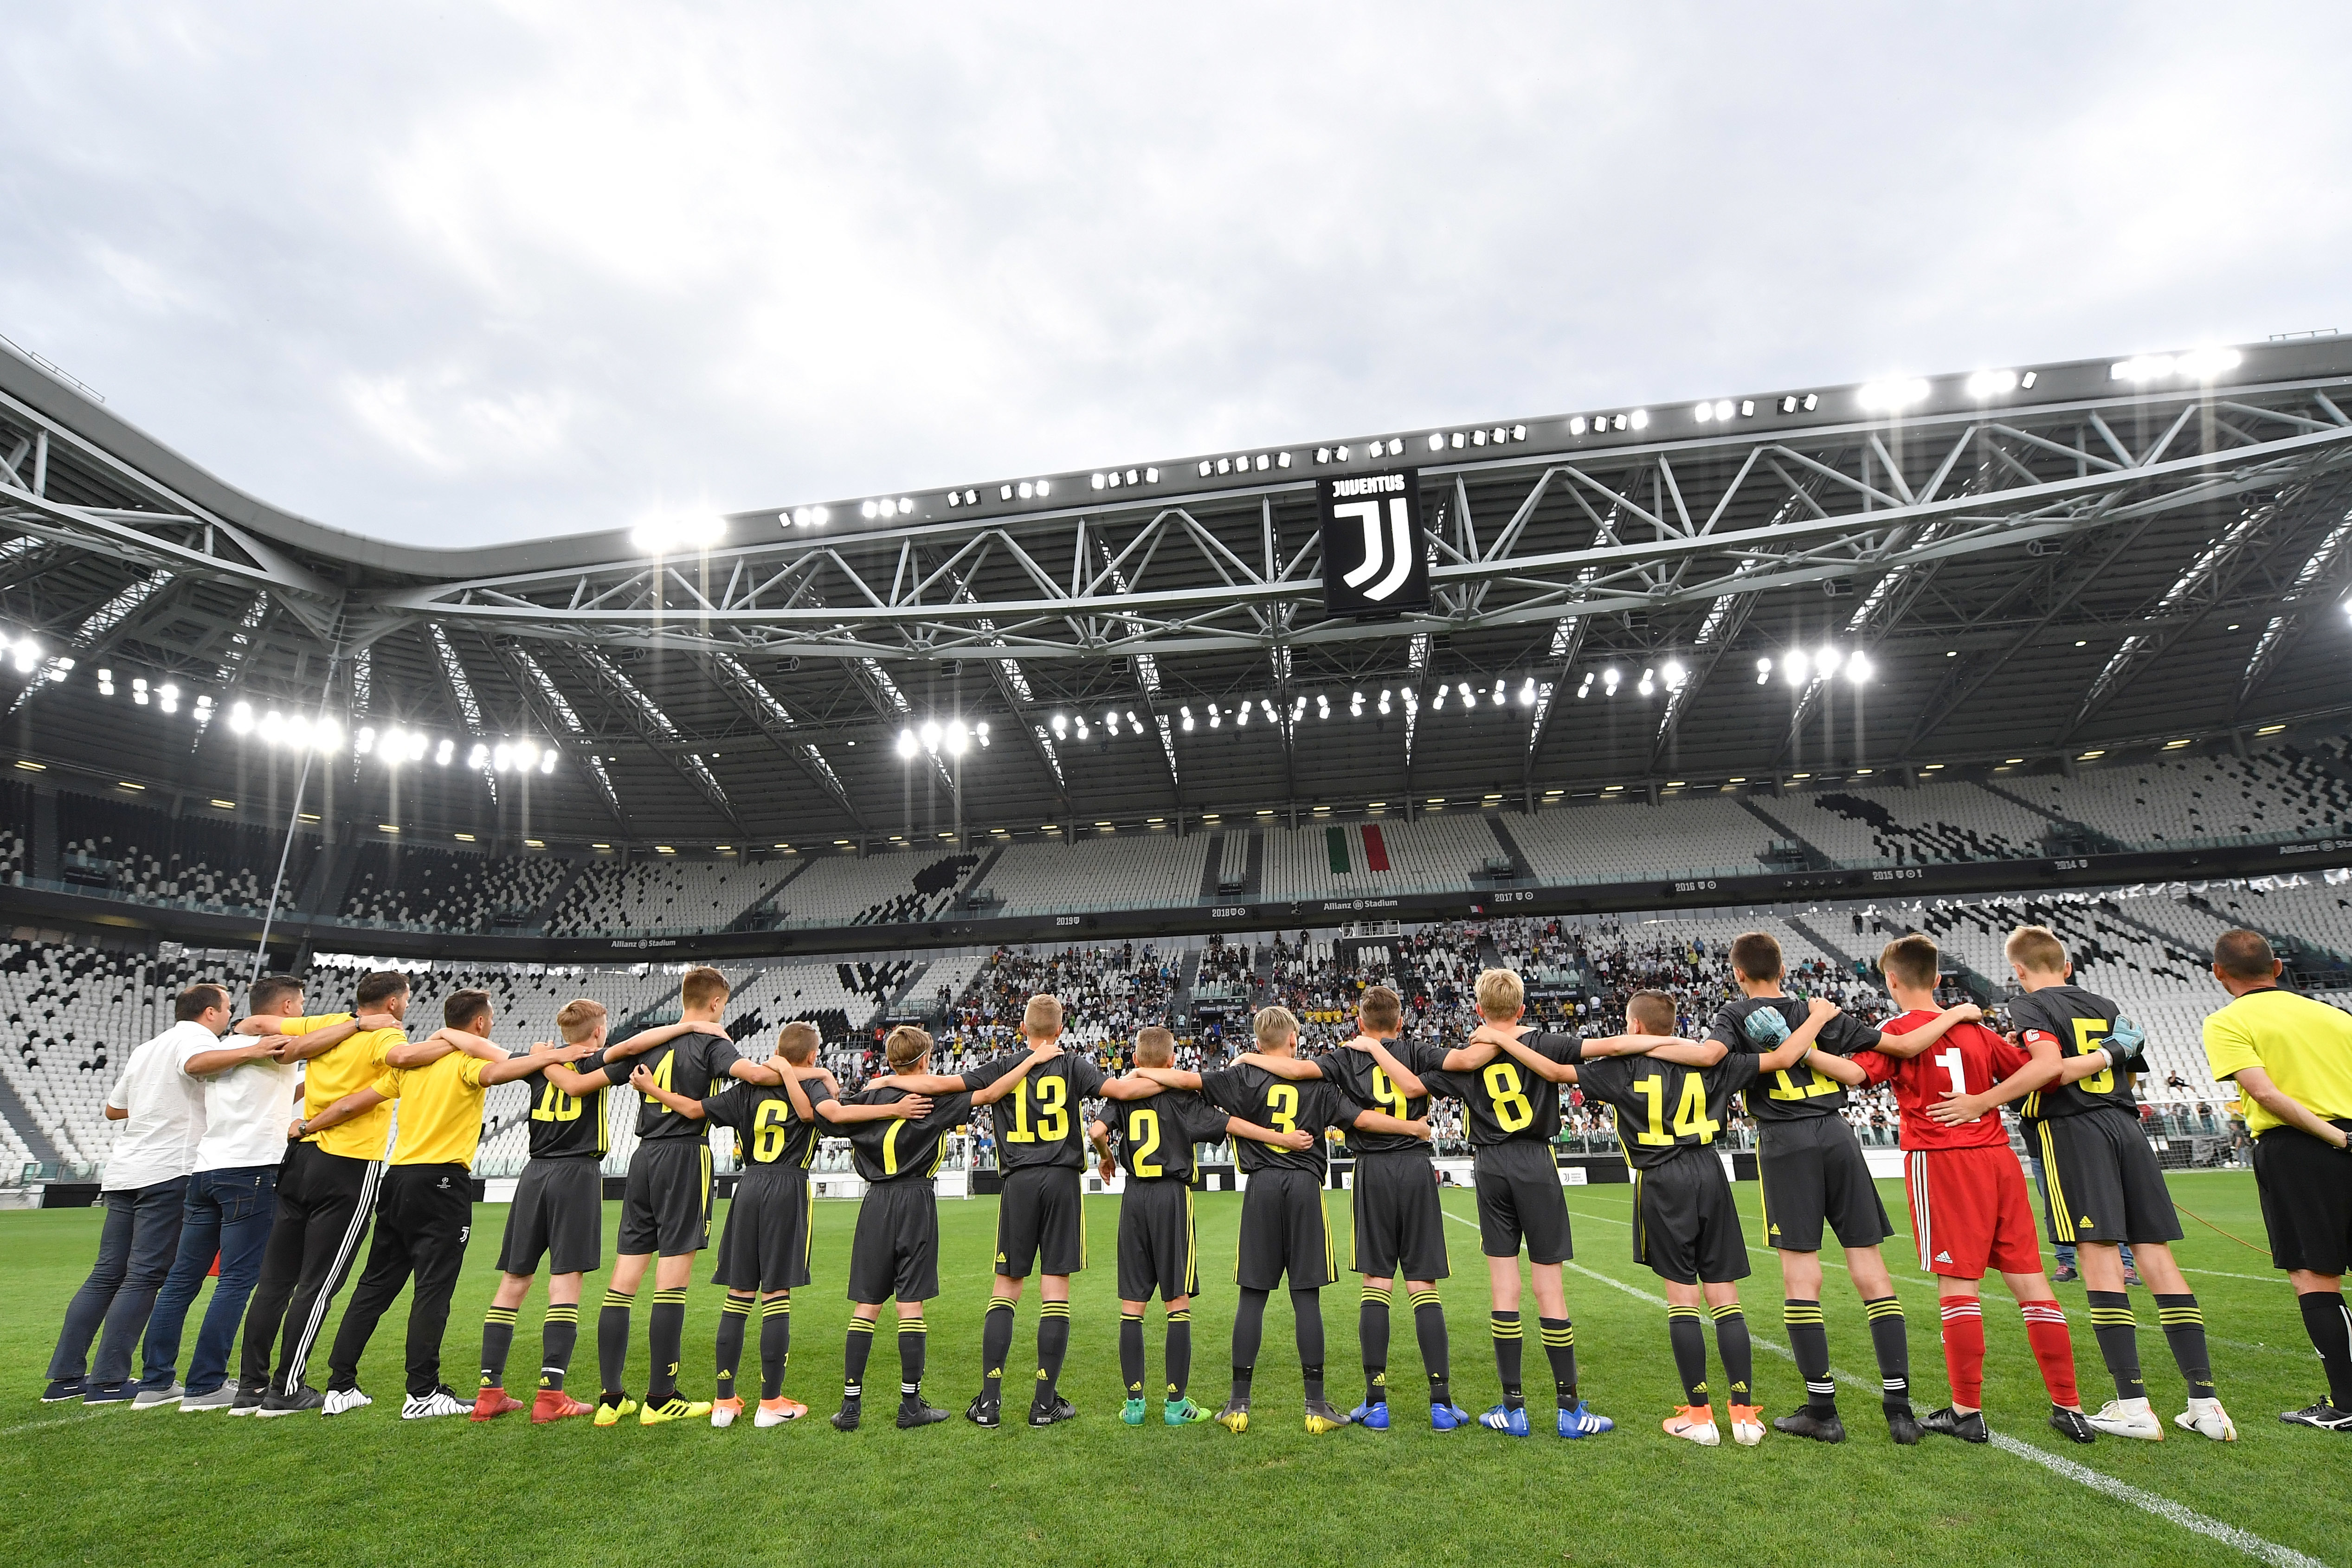 asdasdsad asdasdasd - Football Player - Juventus Football Club